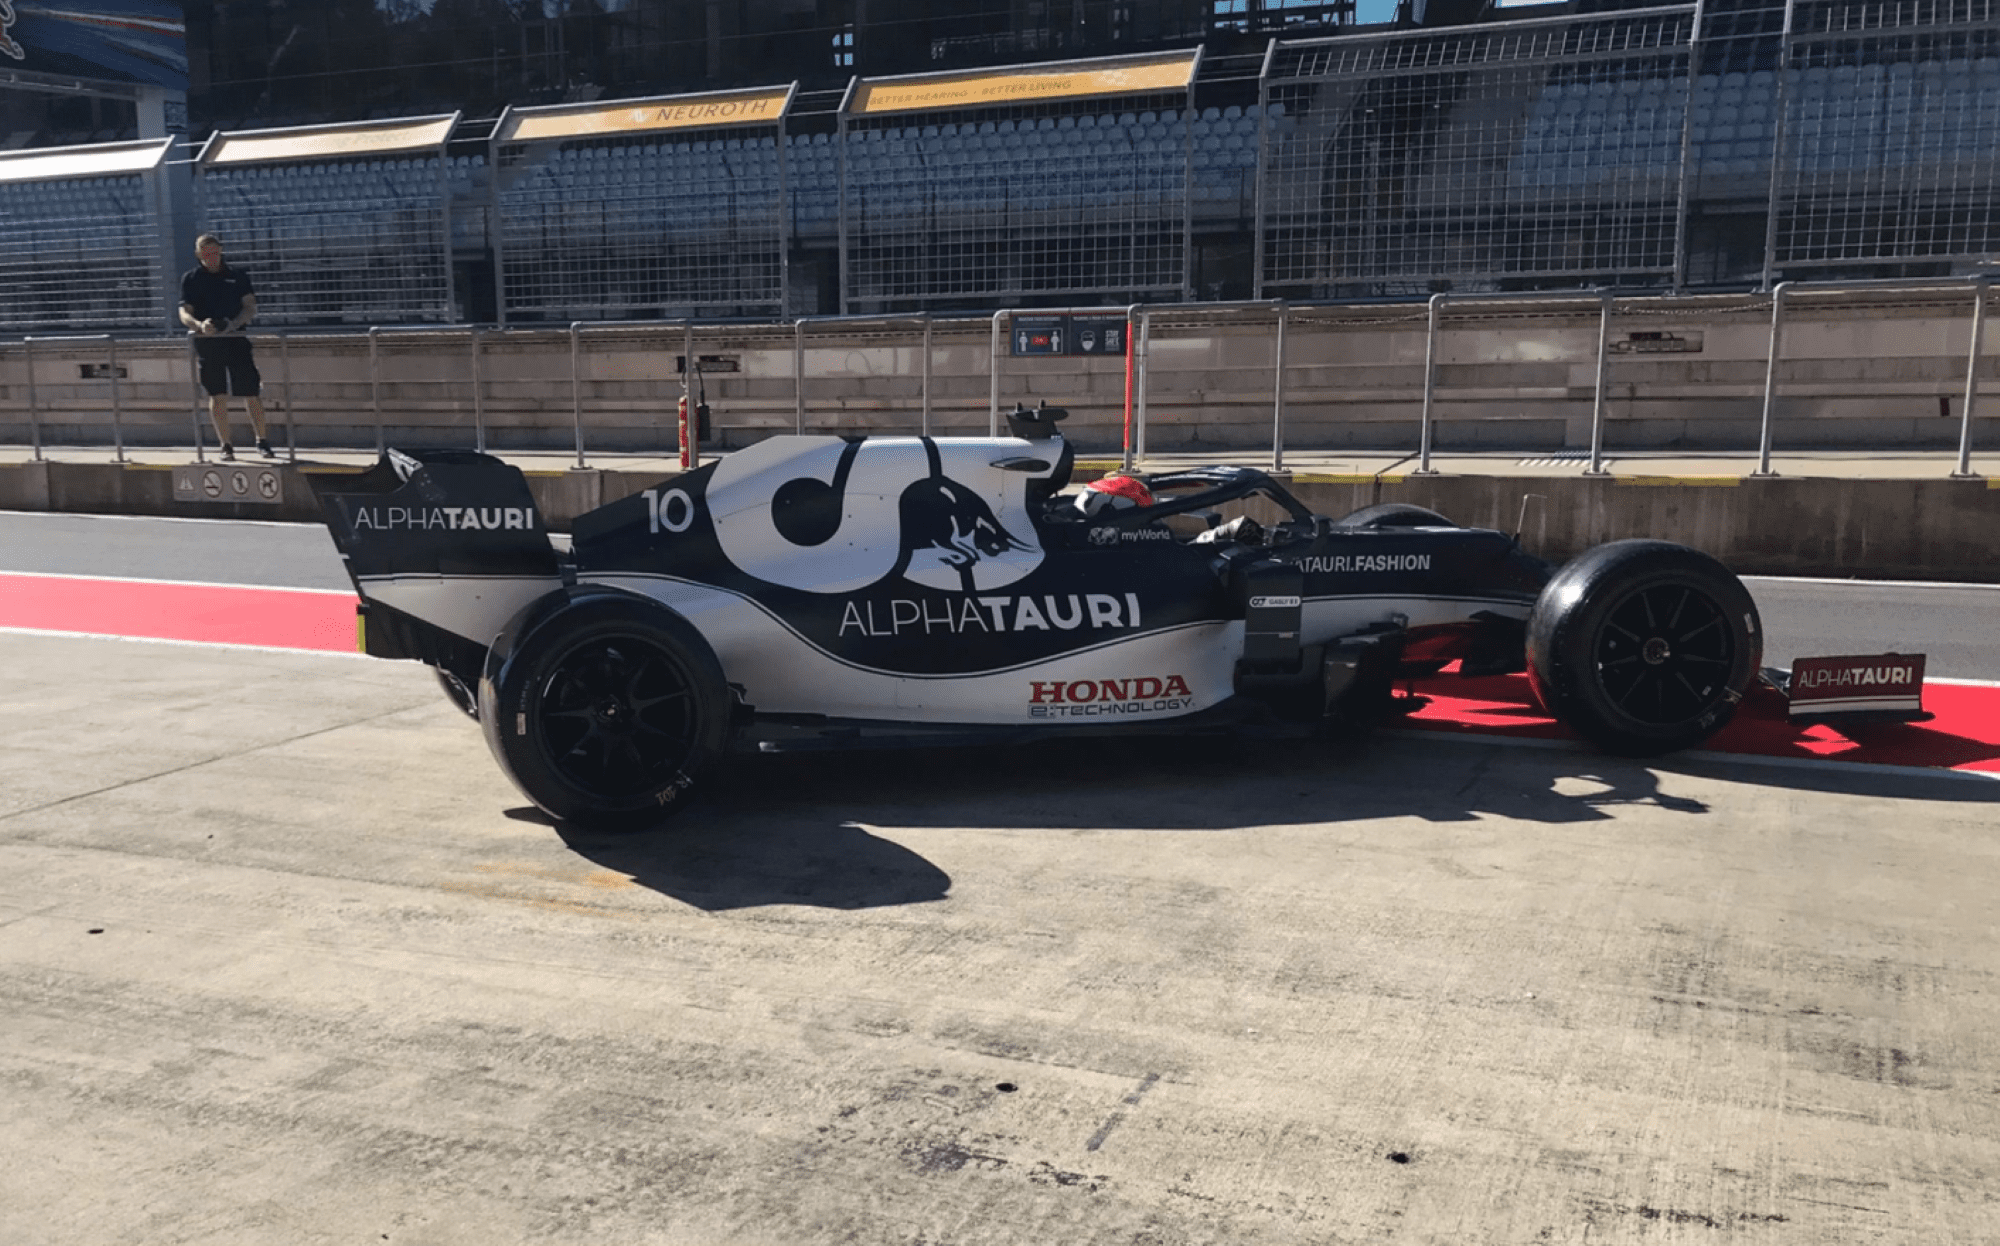 AlphaTauri - Teste Pirelli F1 2021 - Áustria